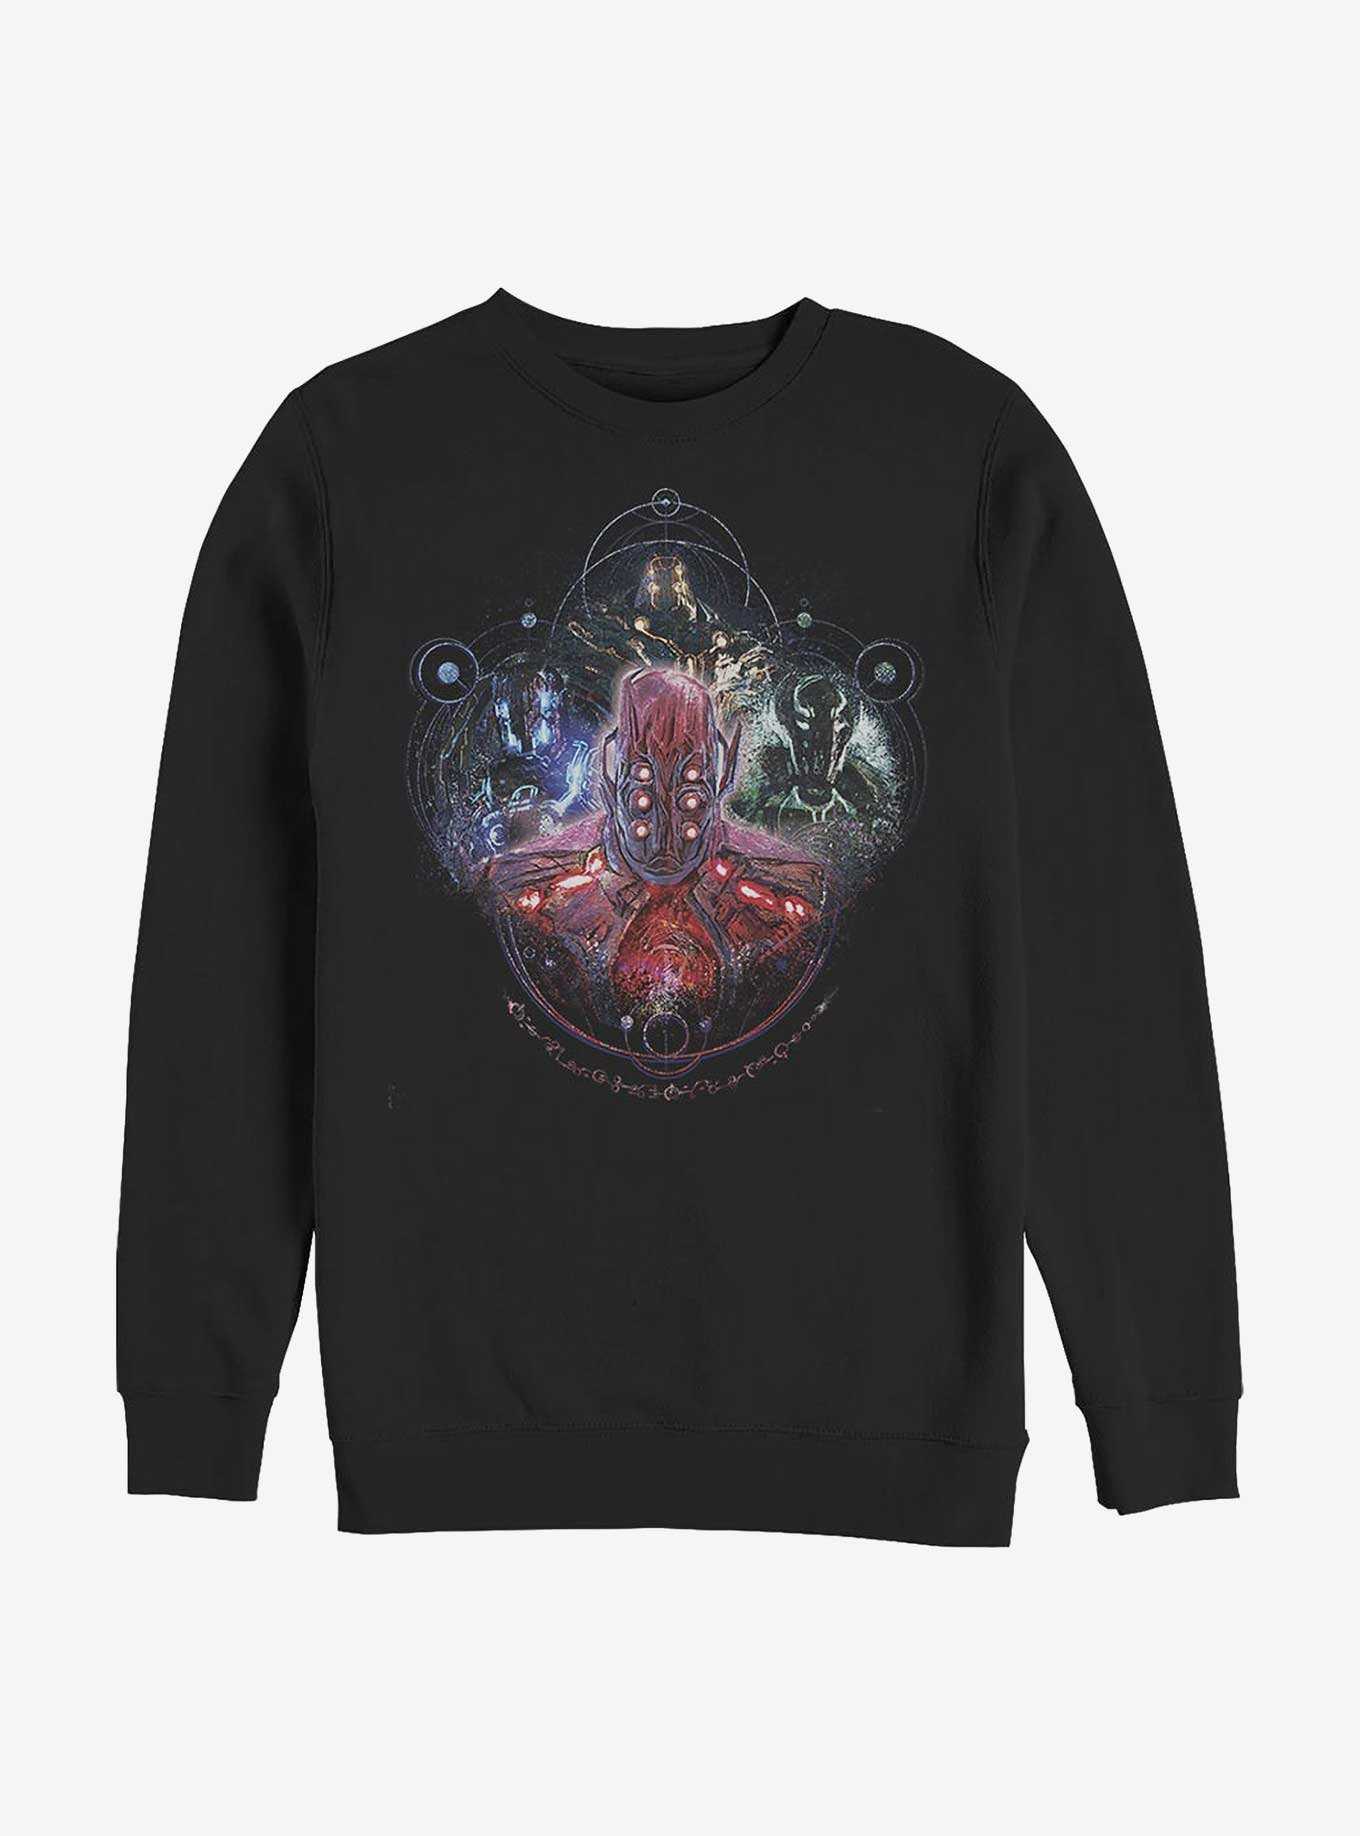 Marvel Eternals Celestials Four Crew Sweatshirt, , hi-res